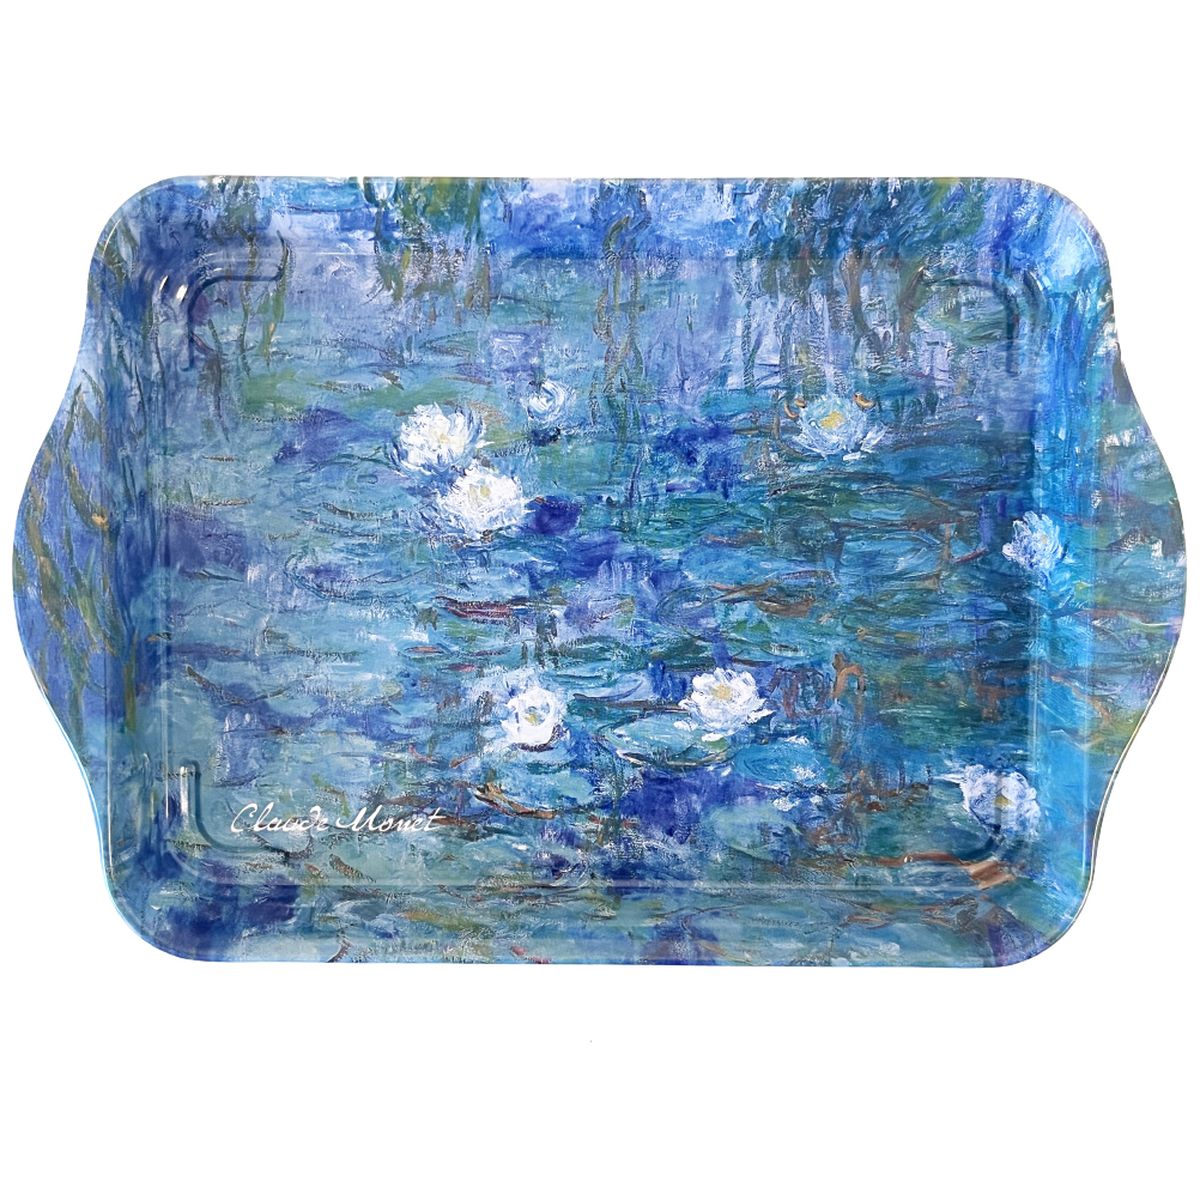 Claude Monet - The nymphs little tray 21 x 14 cm